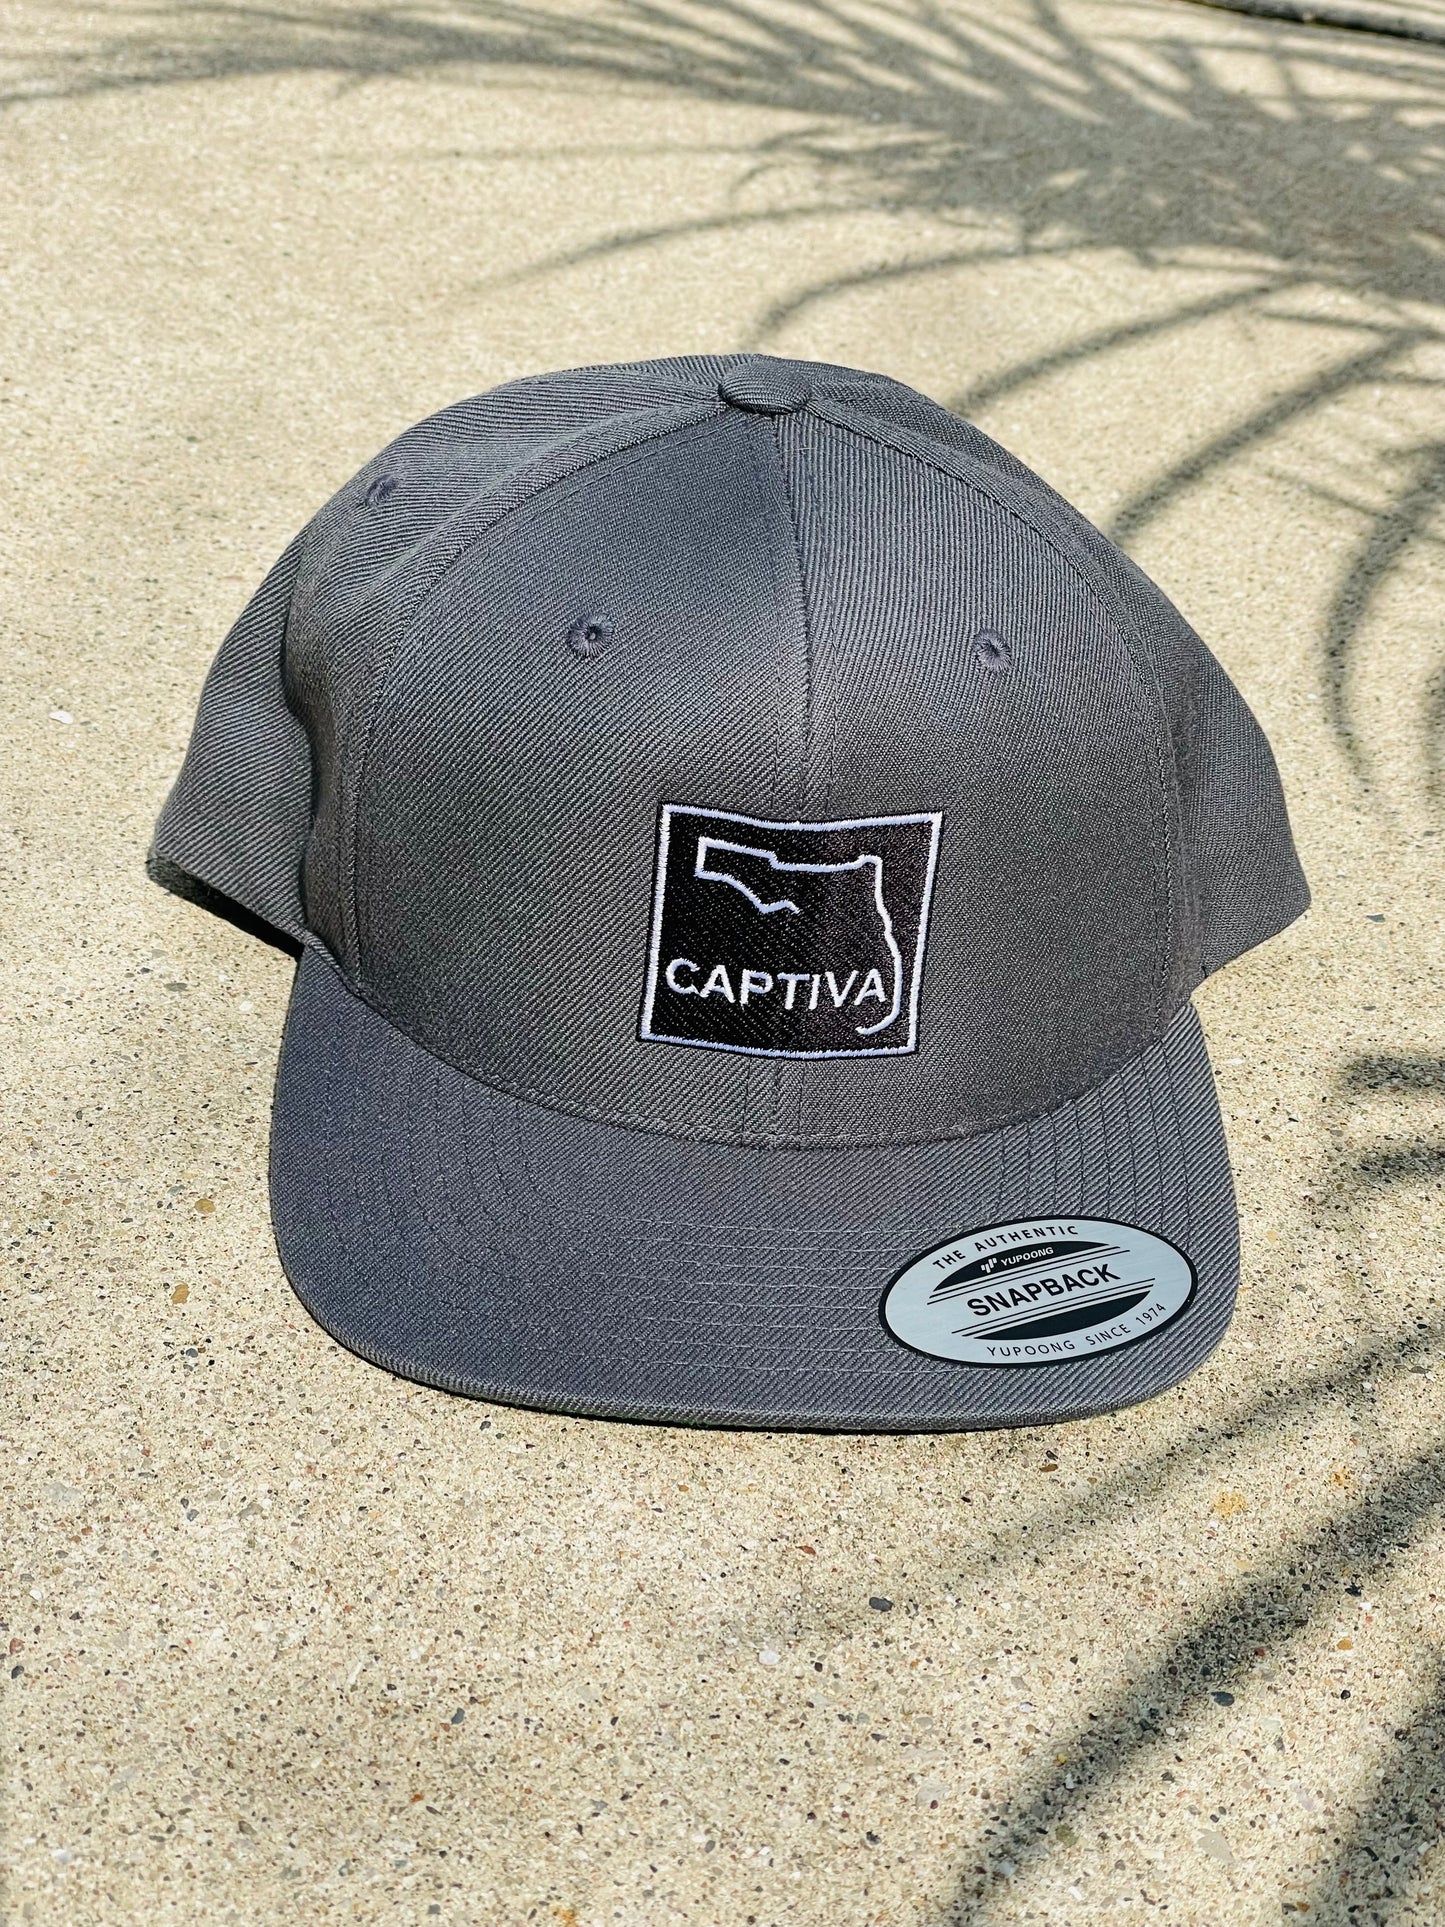 Captiva Snapback Hat